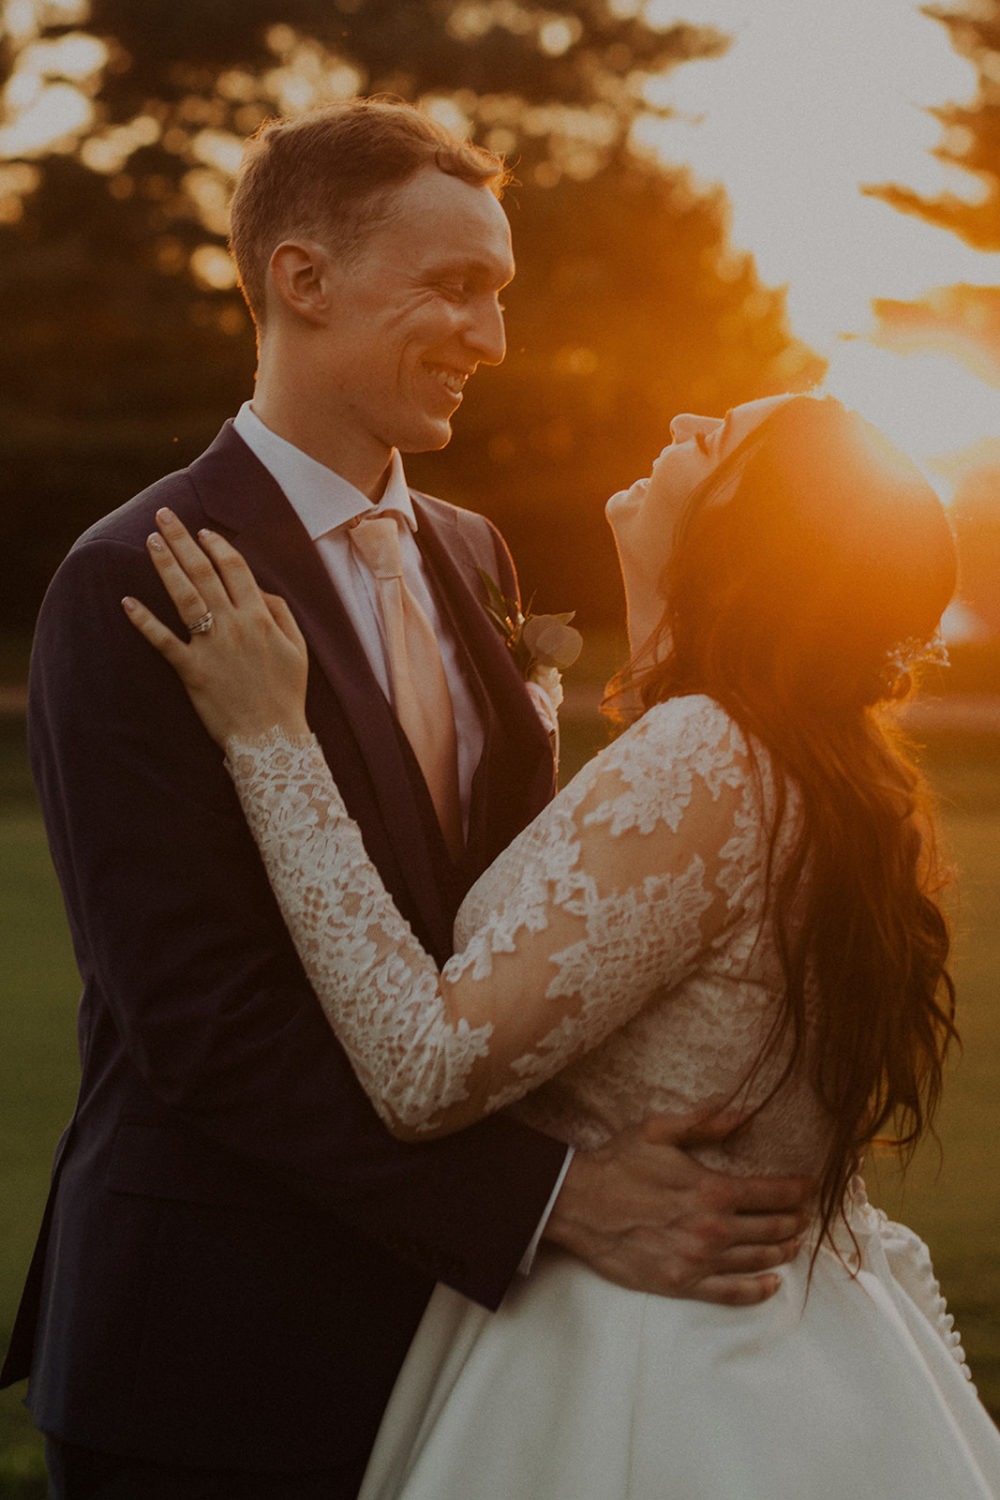 Couple embraces during sunset wedding photos